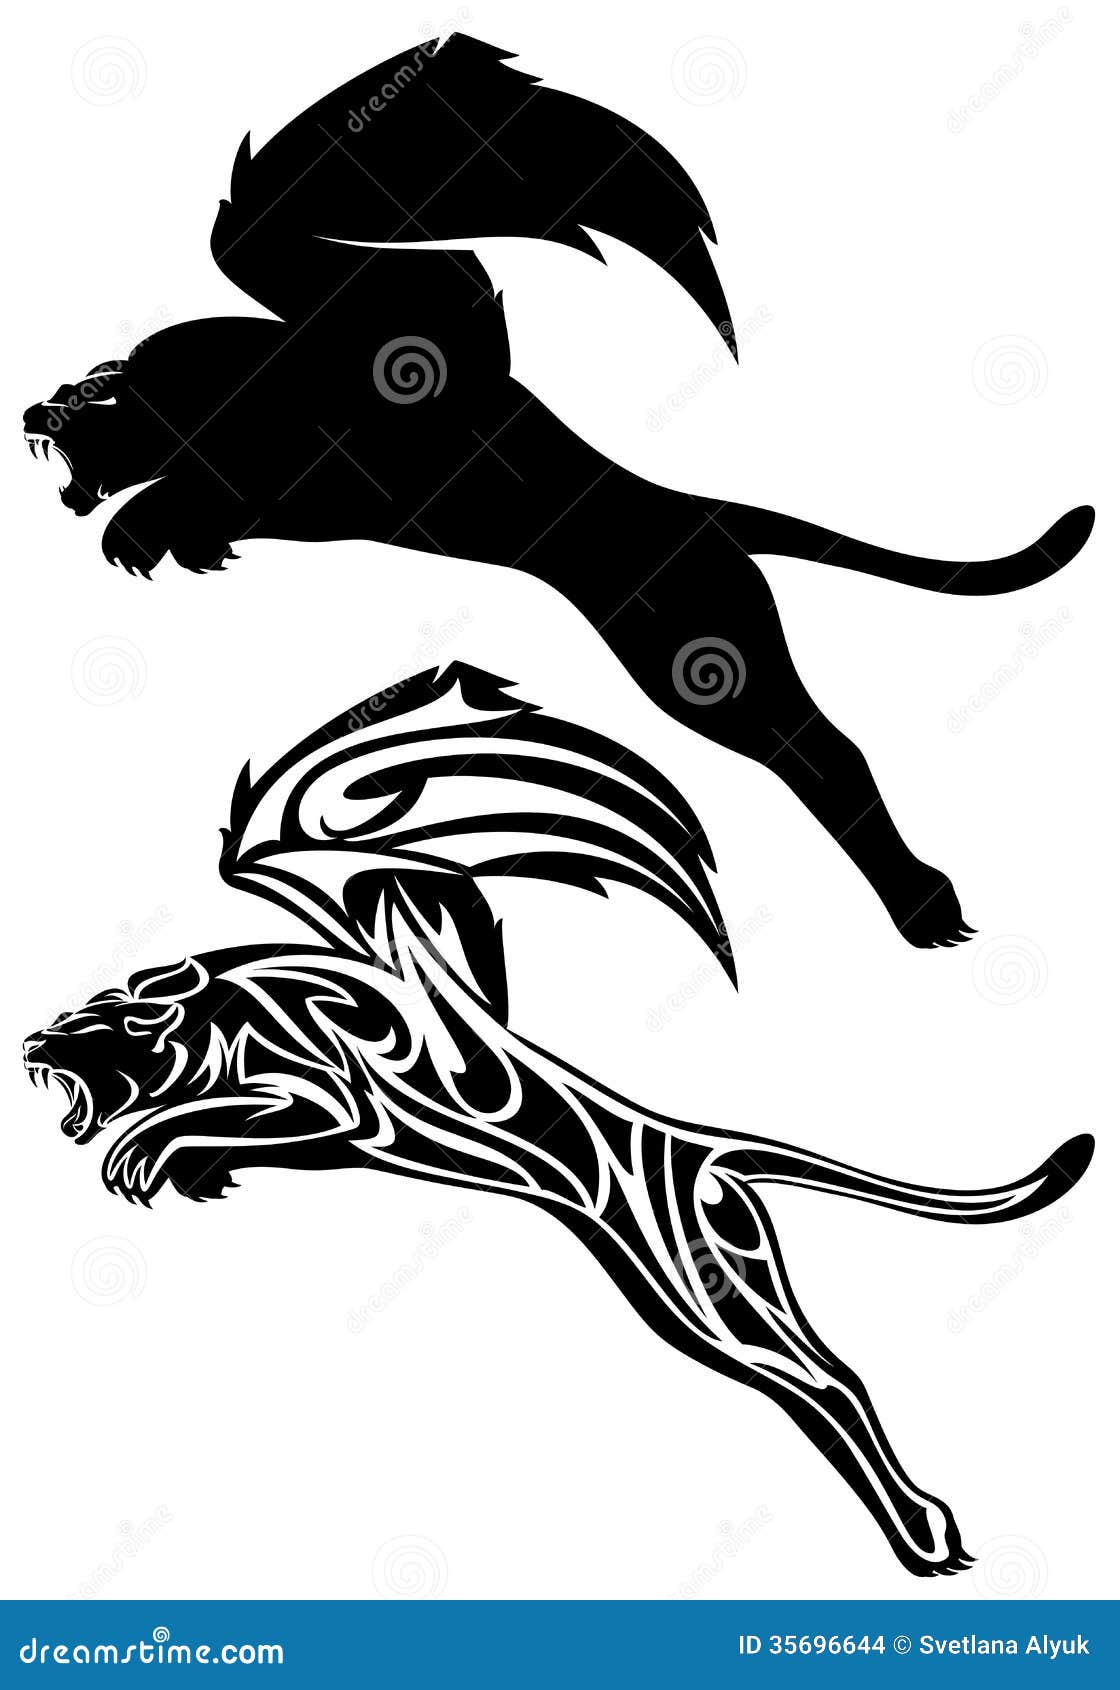 Женские эскизы тату Пантеры, дикие кошки - Студия